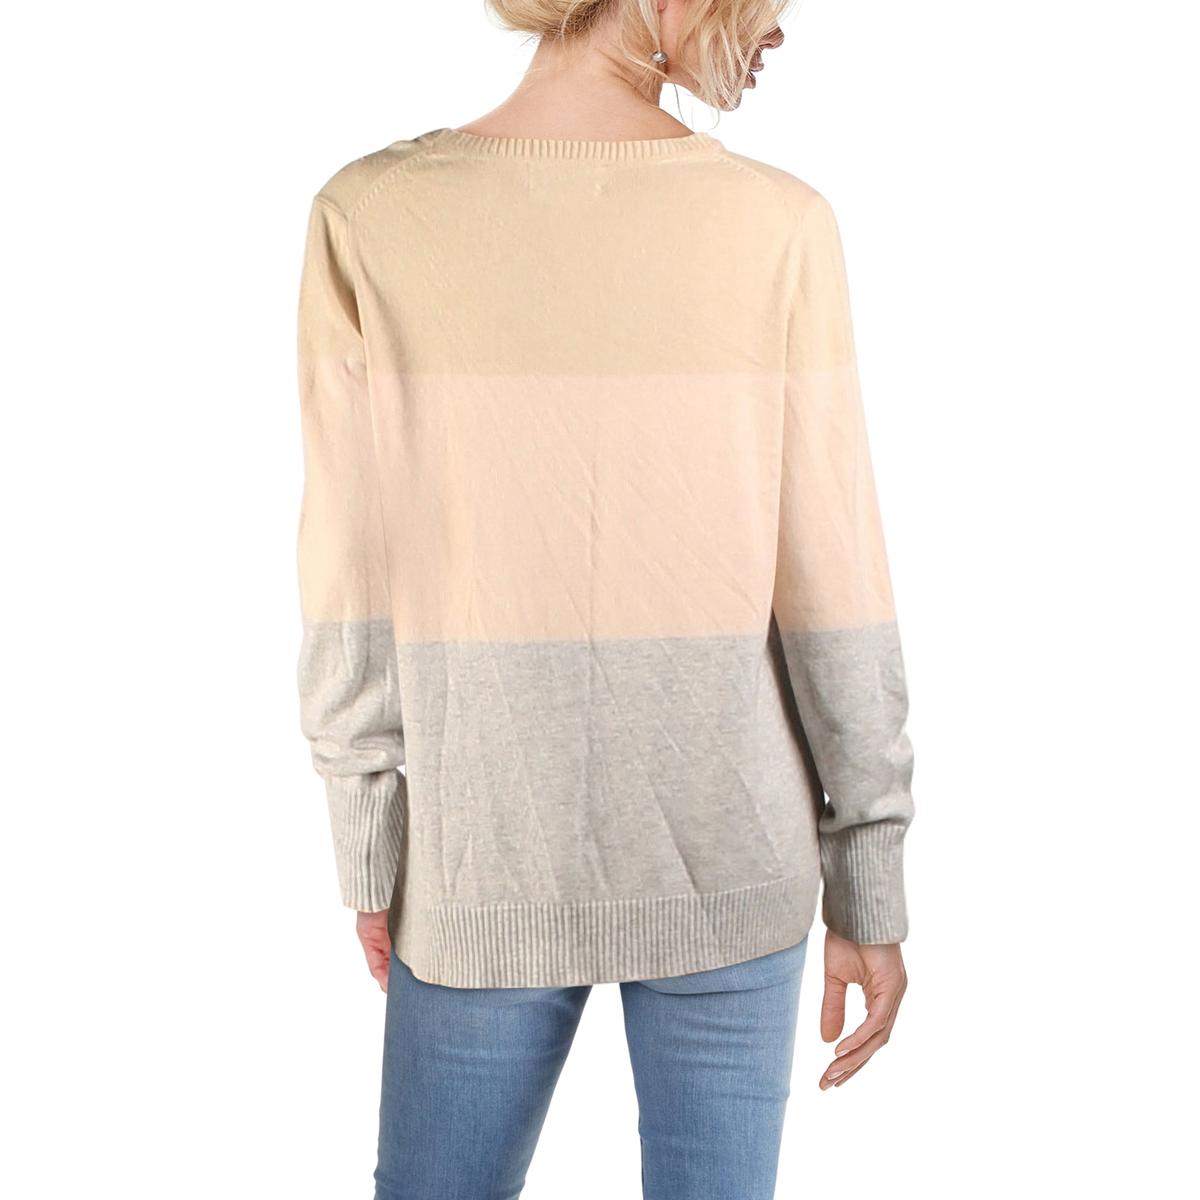 Nanette Nanette Lepore Womens Beige Cashmere Colorblock Sweater Top M ...